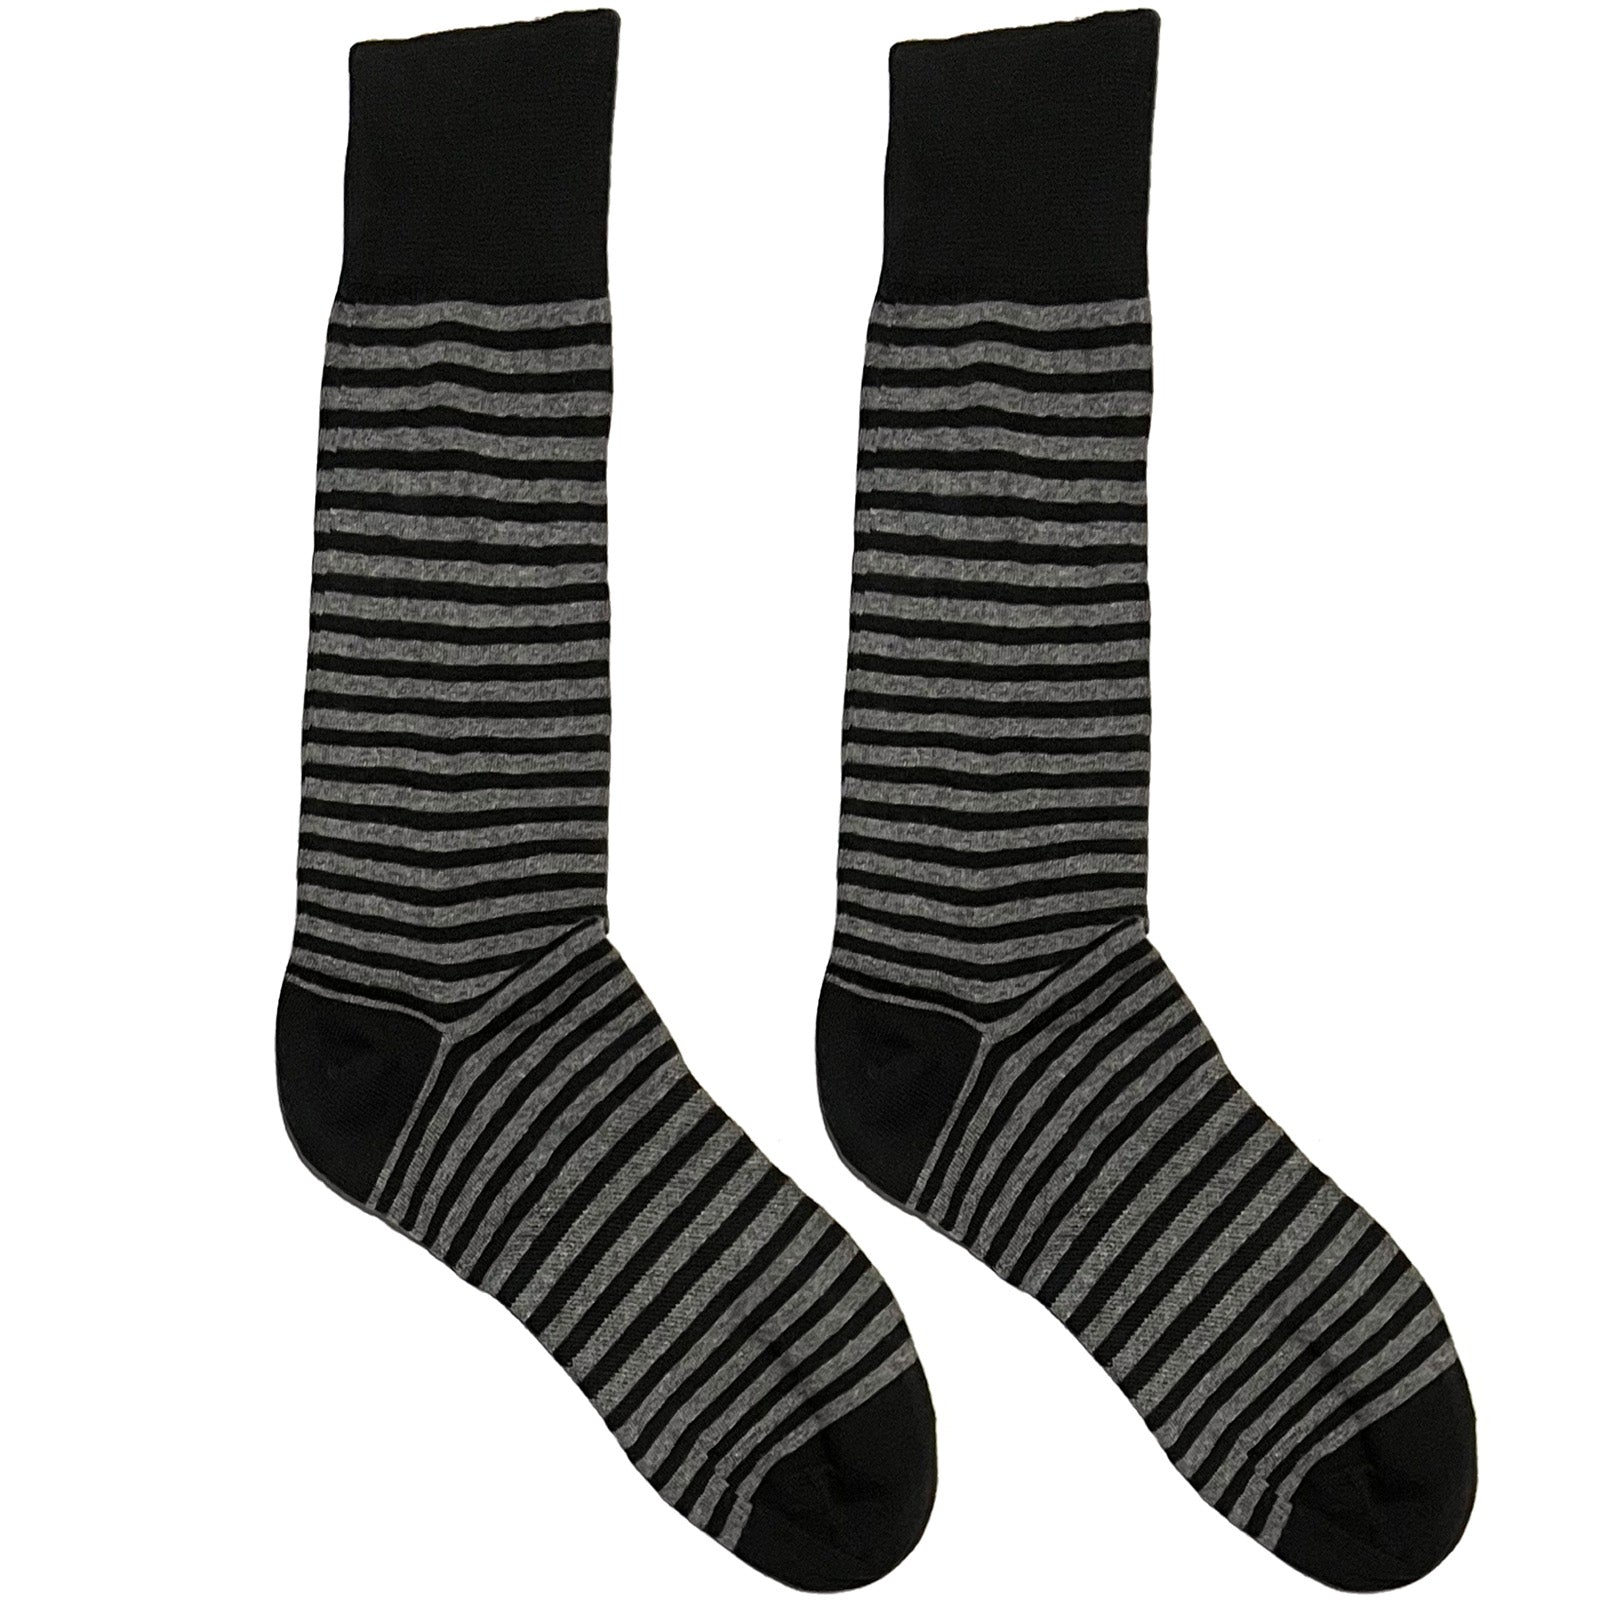 Black And Grey Stripes Socks